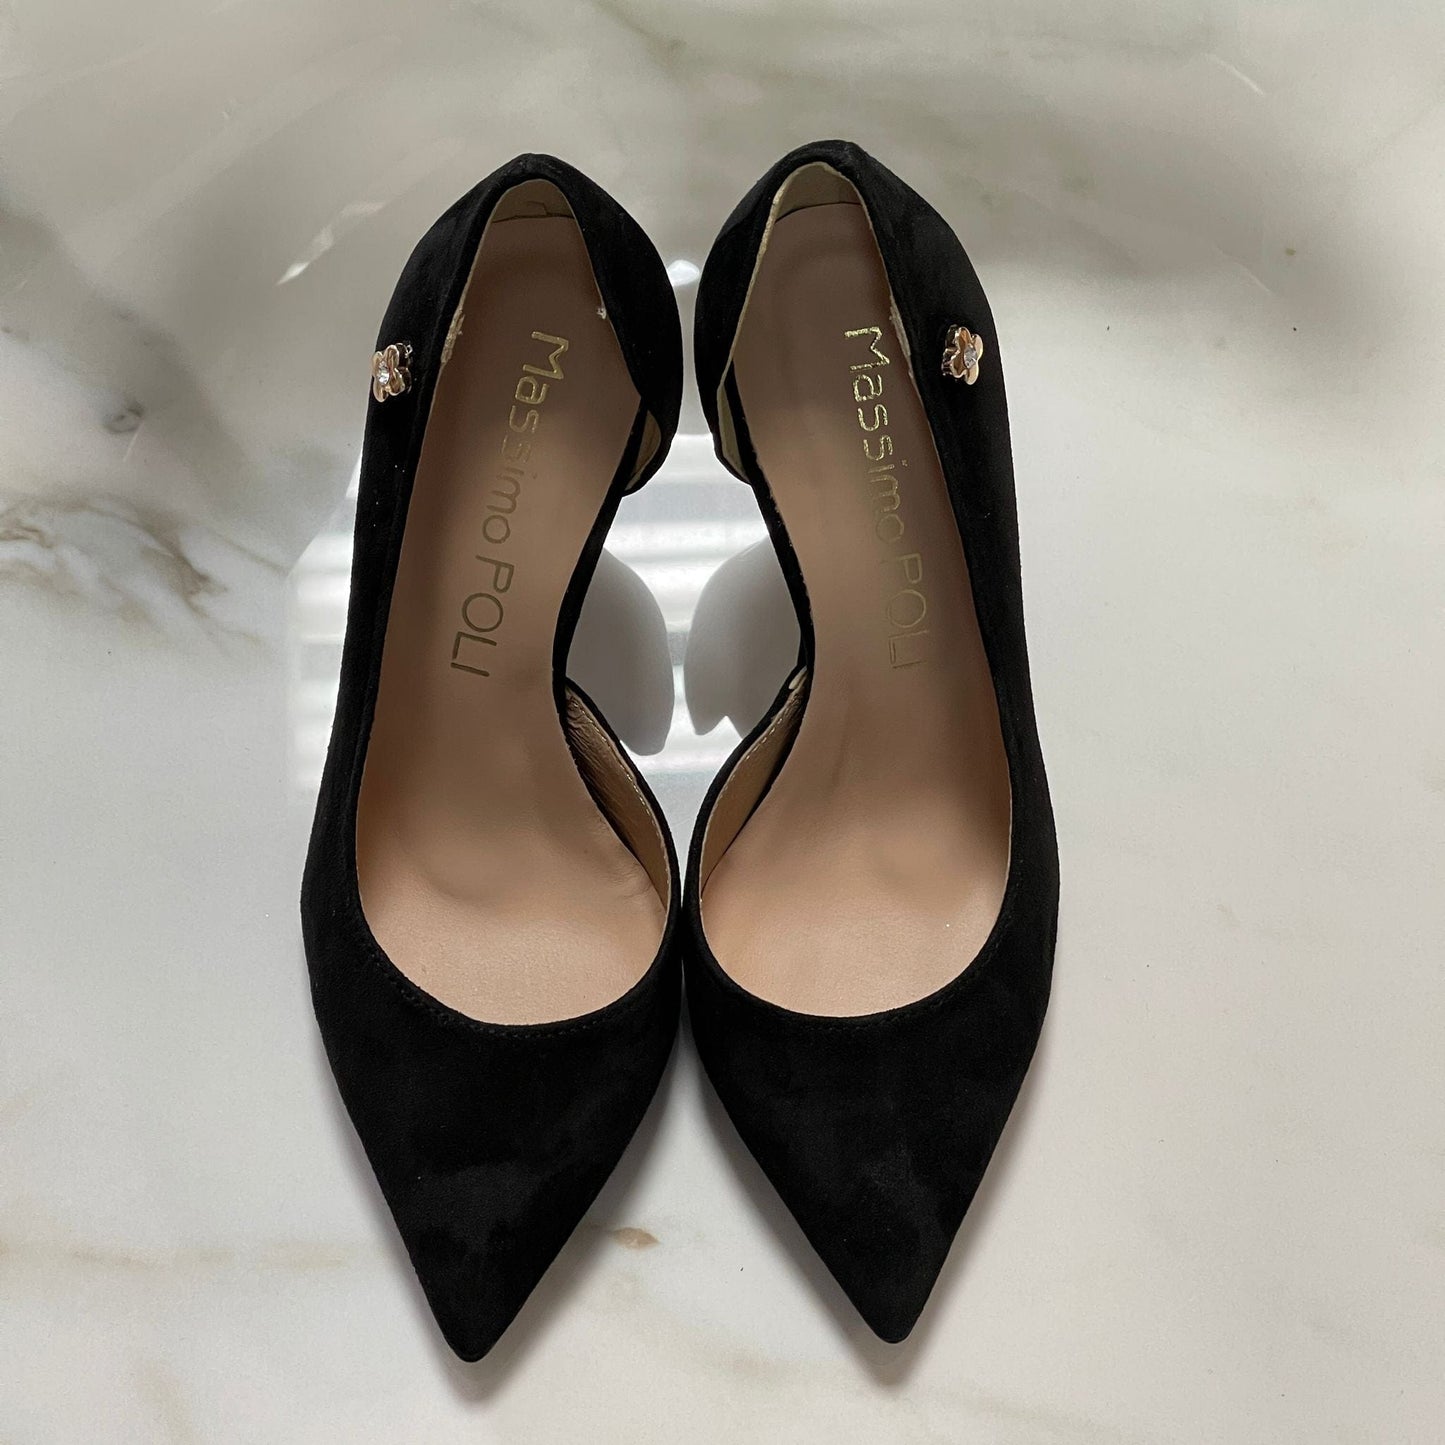 Pointed toe petite court heels in black suede